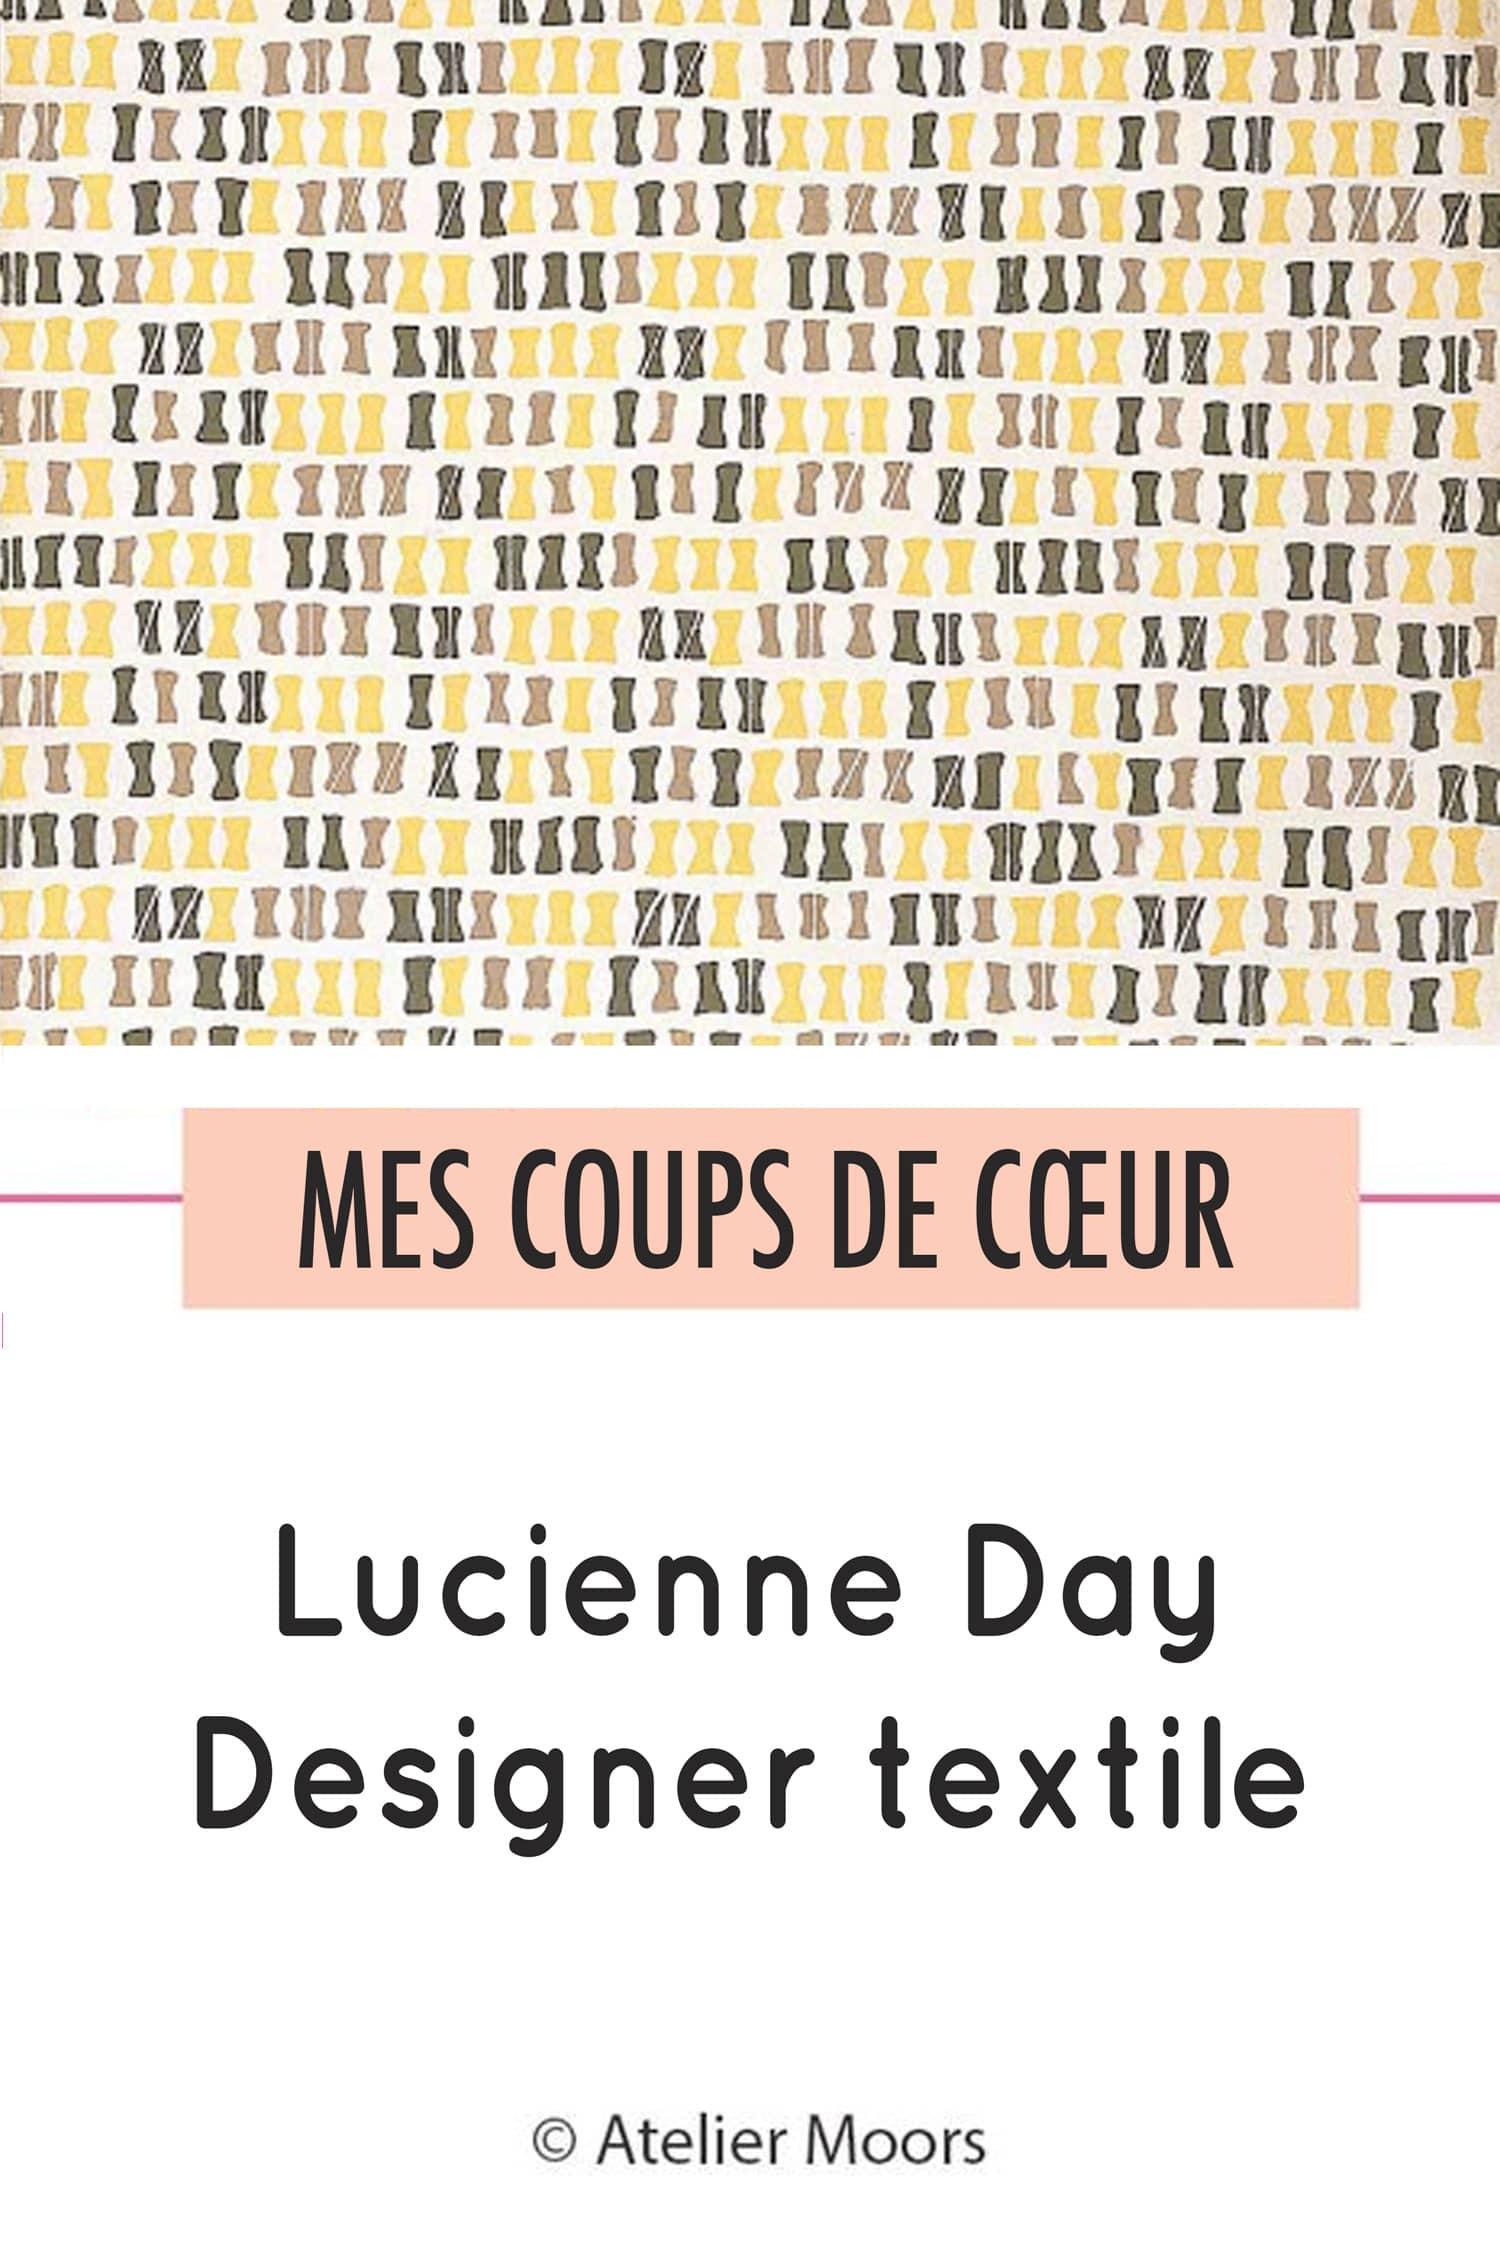 lucienne day designer textile